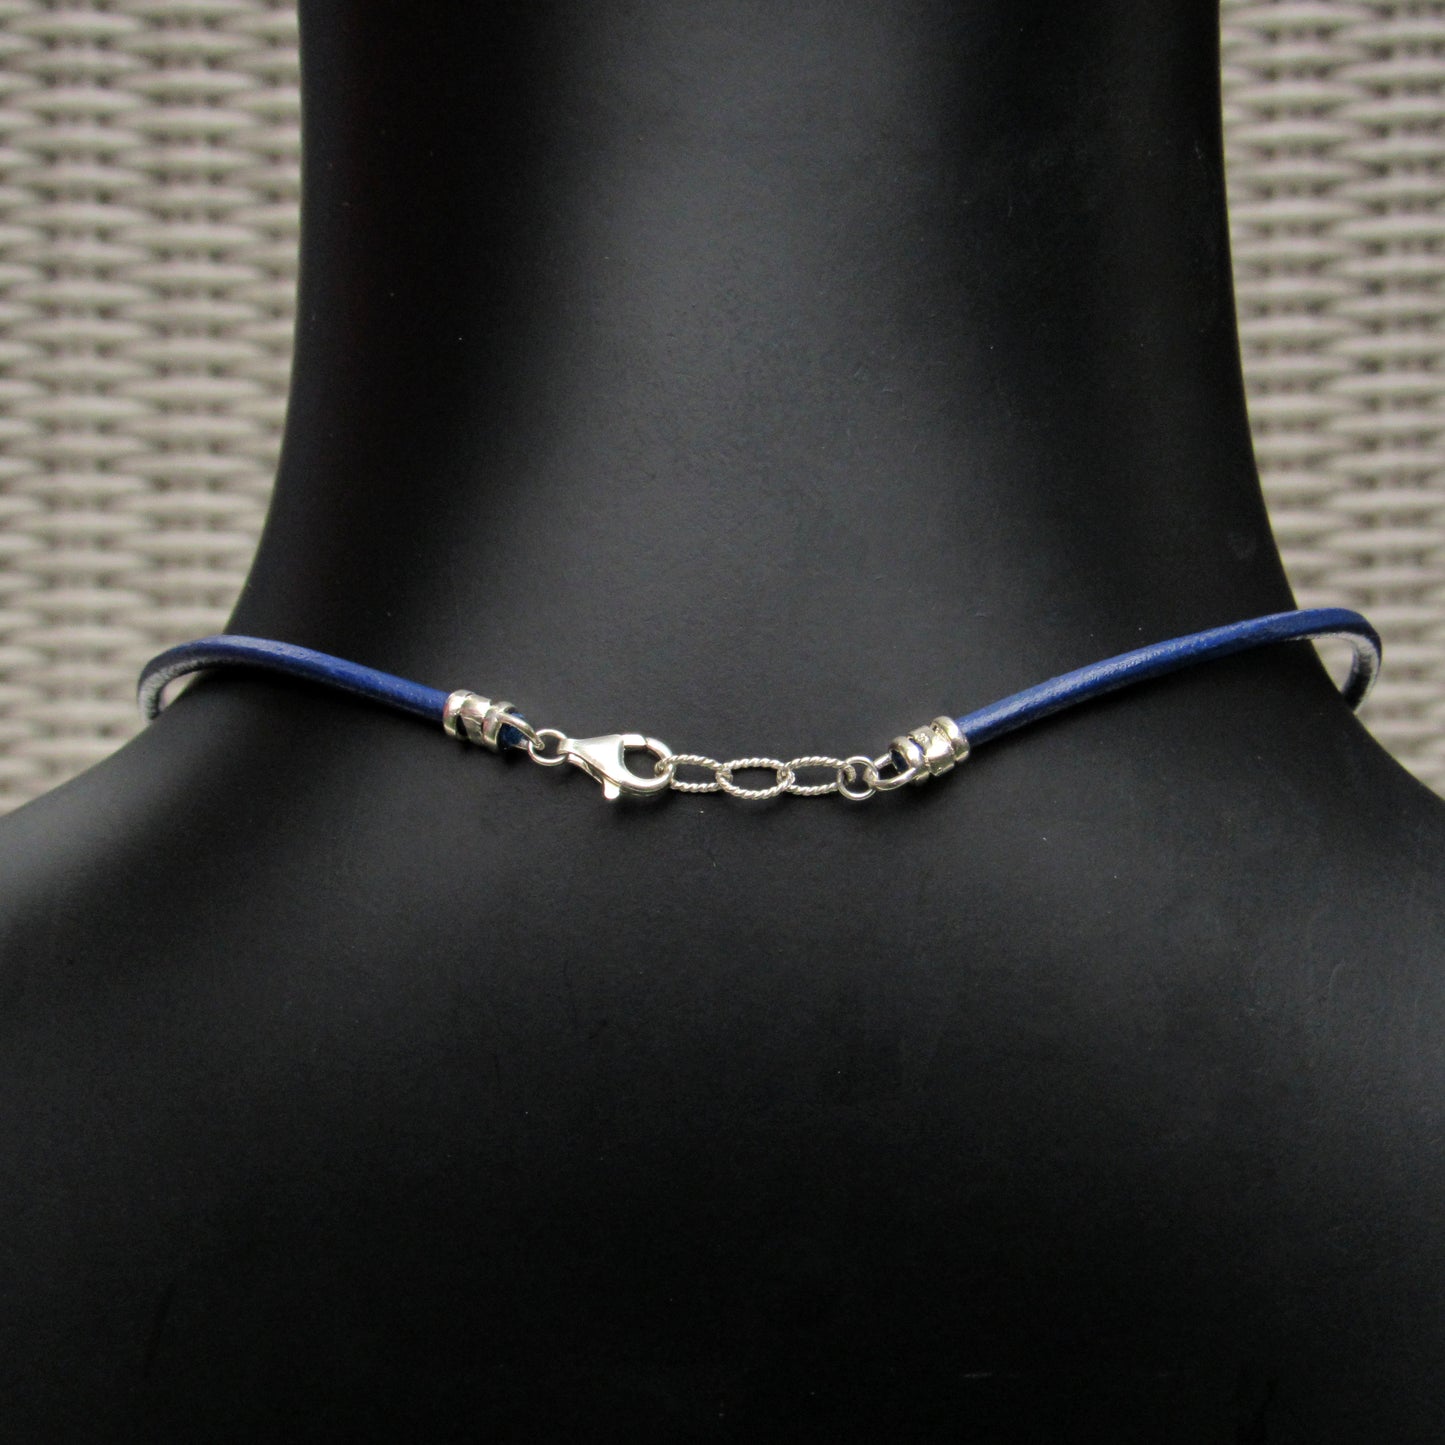 Men's Minimalist Leather Necklace with Gemstone